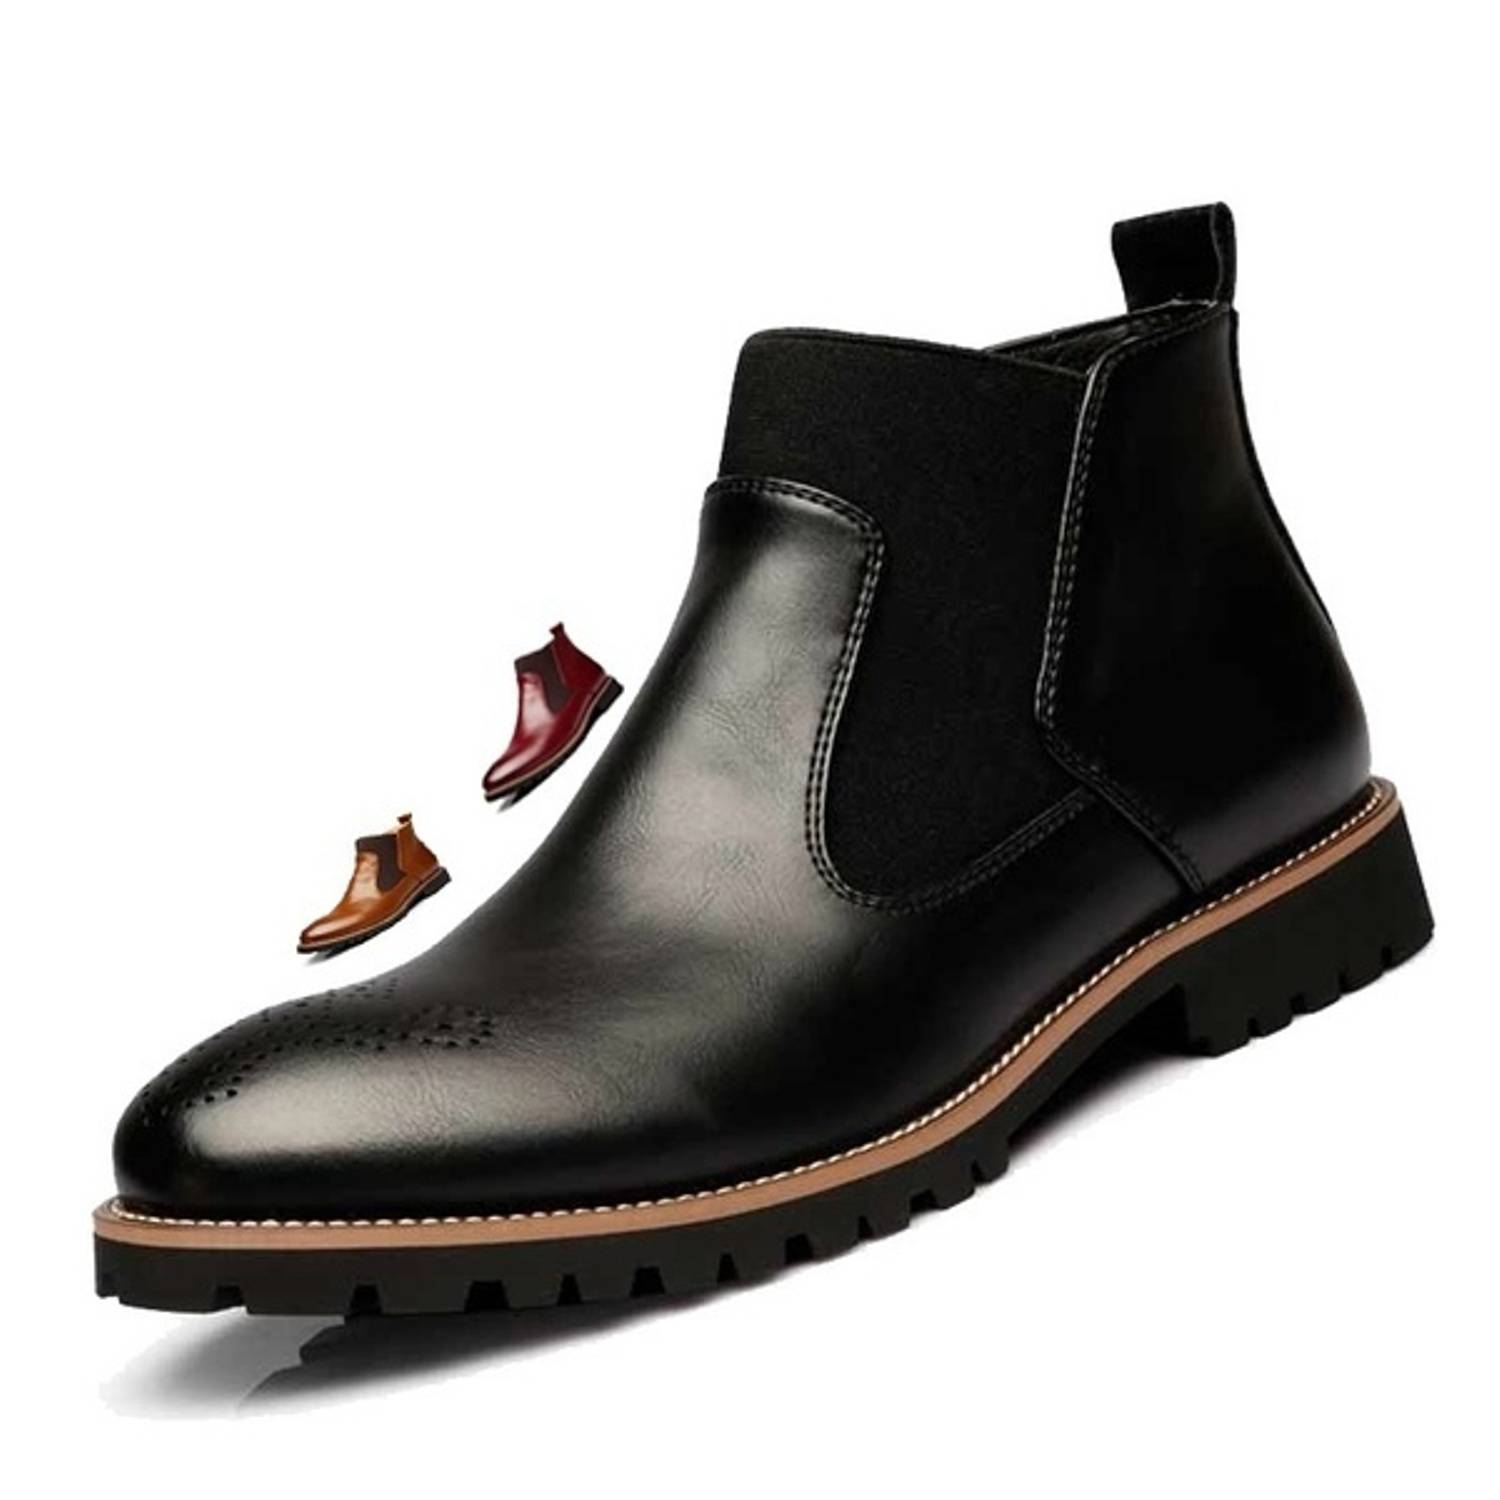 Fashion & Lifestyle :: SHOES AND BAGS :: Men's Shoes :: Men's Boots ...